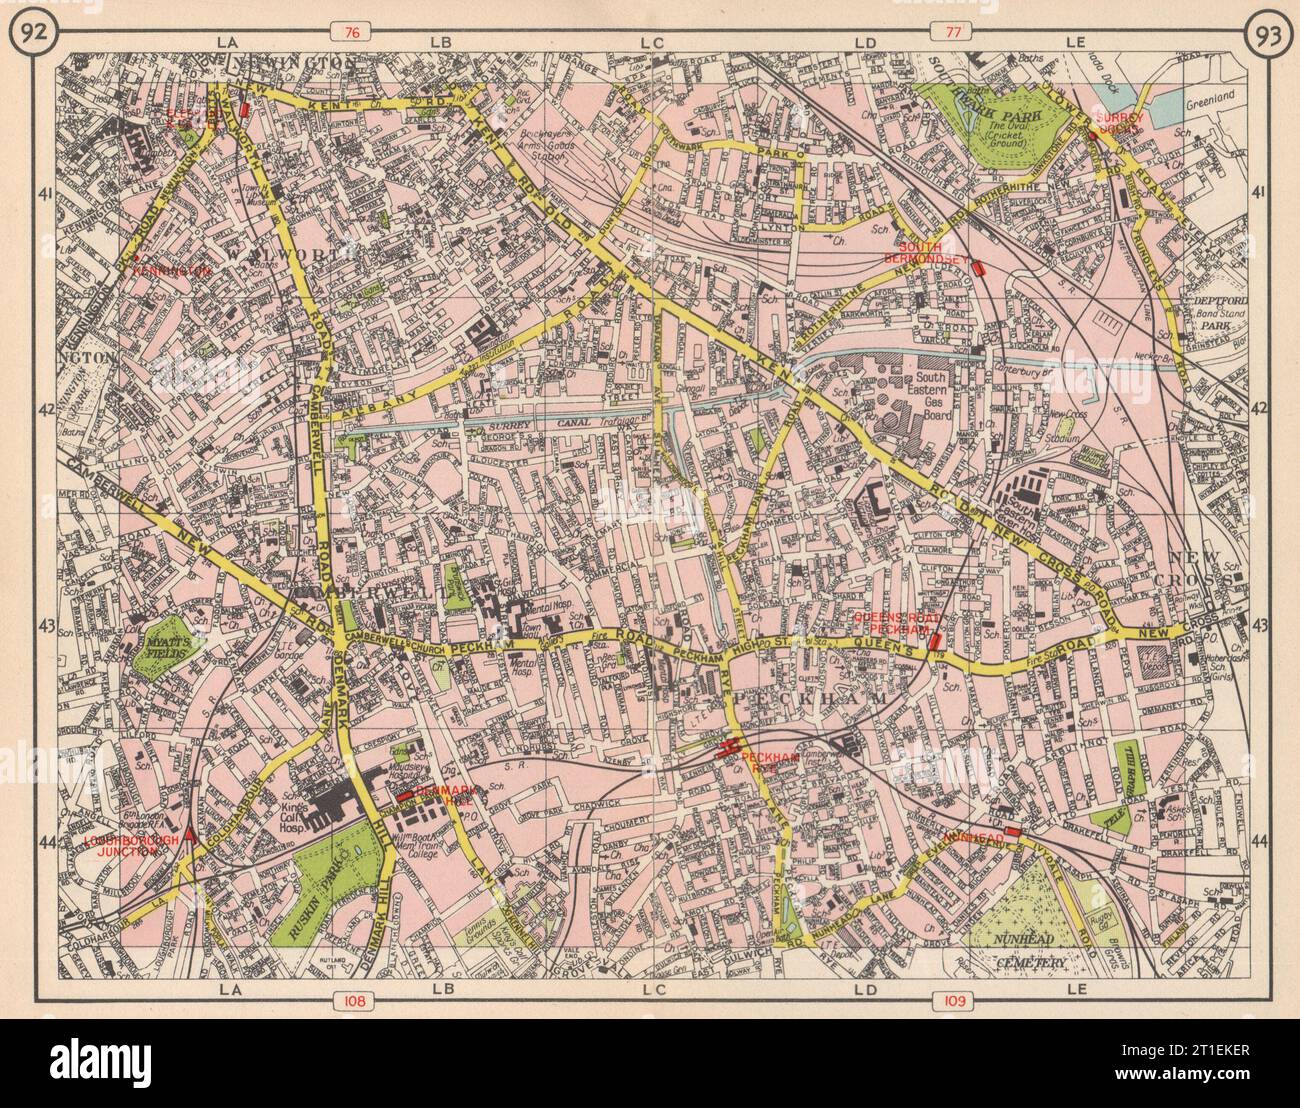 S LONDON. Walworth Camberwell Peckham Walworth Bermondsey Denmark Hill 1953 map Stock Photo